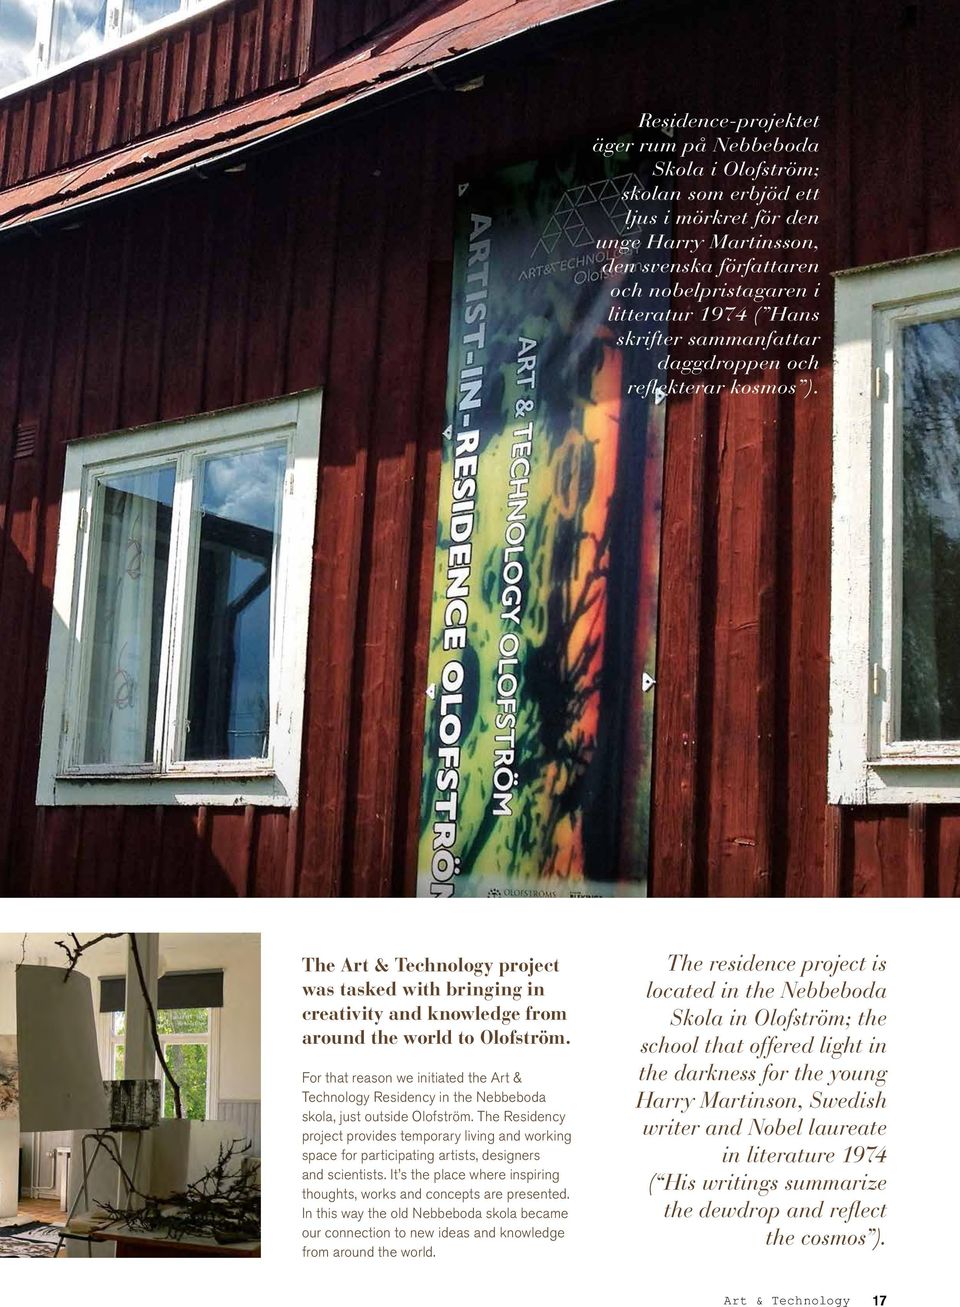 For that reason we initiated the Art & Technology Residency in the Nebbeboda skola, just outside Olofström.